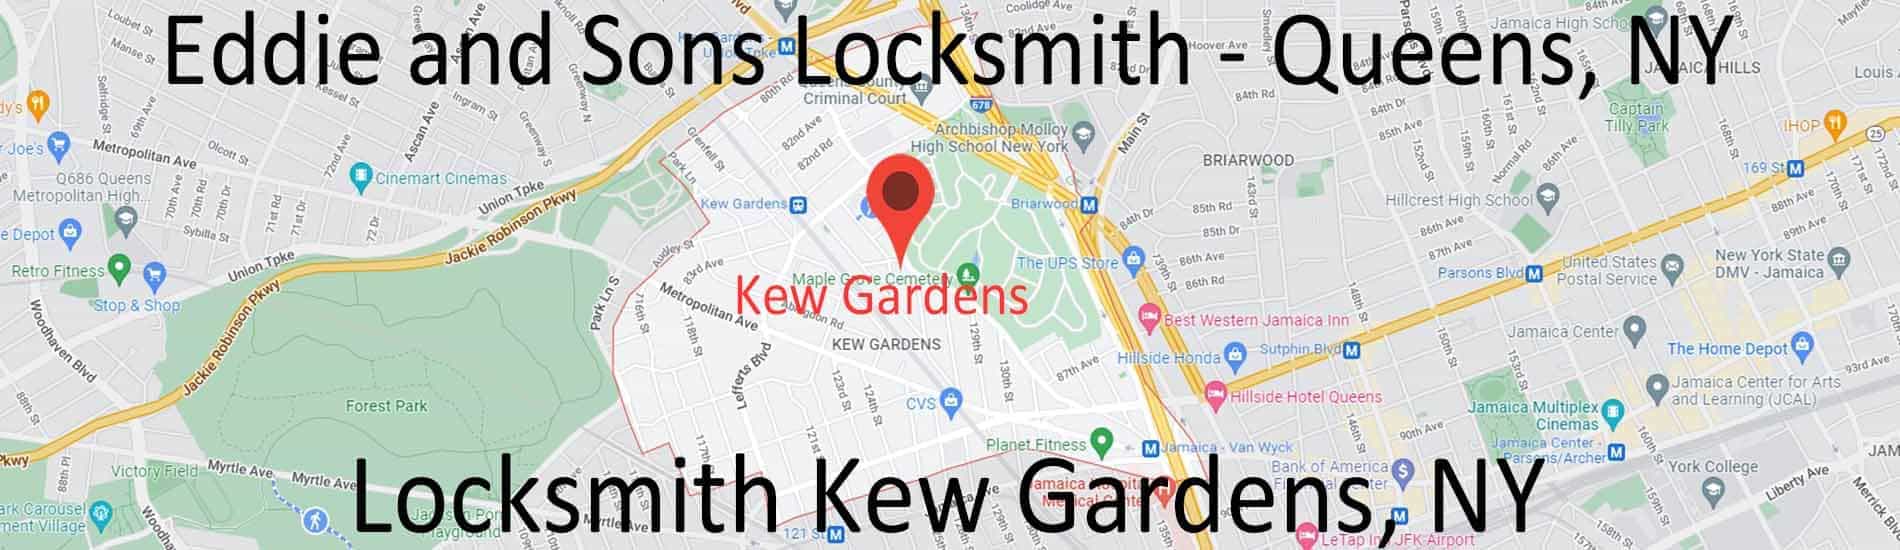 kew-gardens-locksmith-min